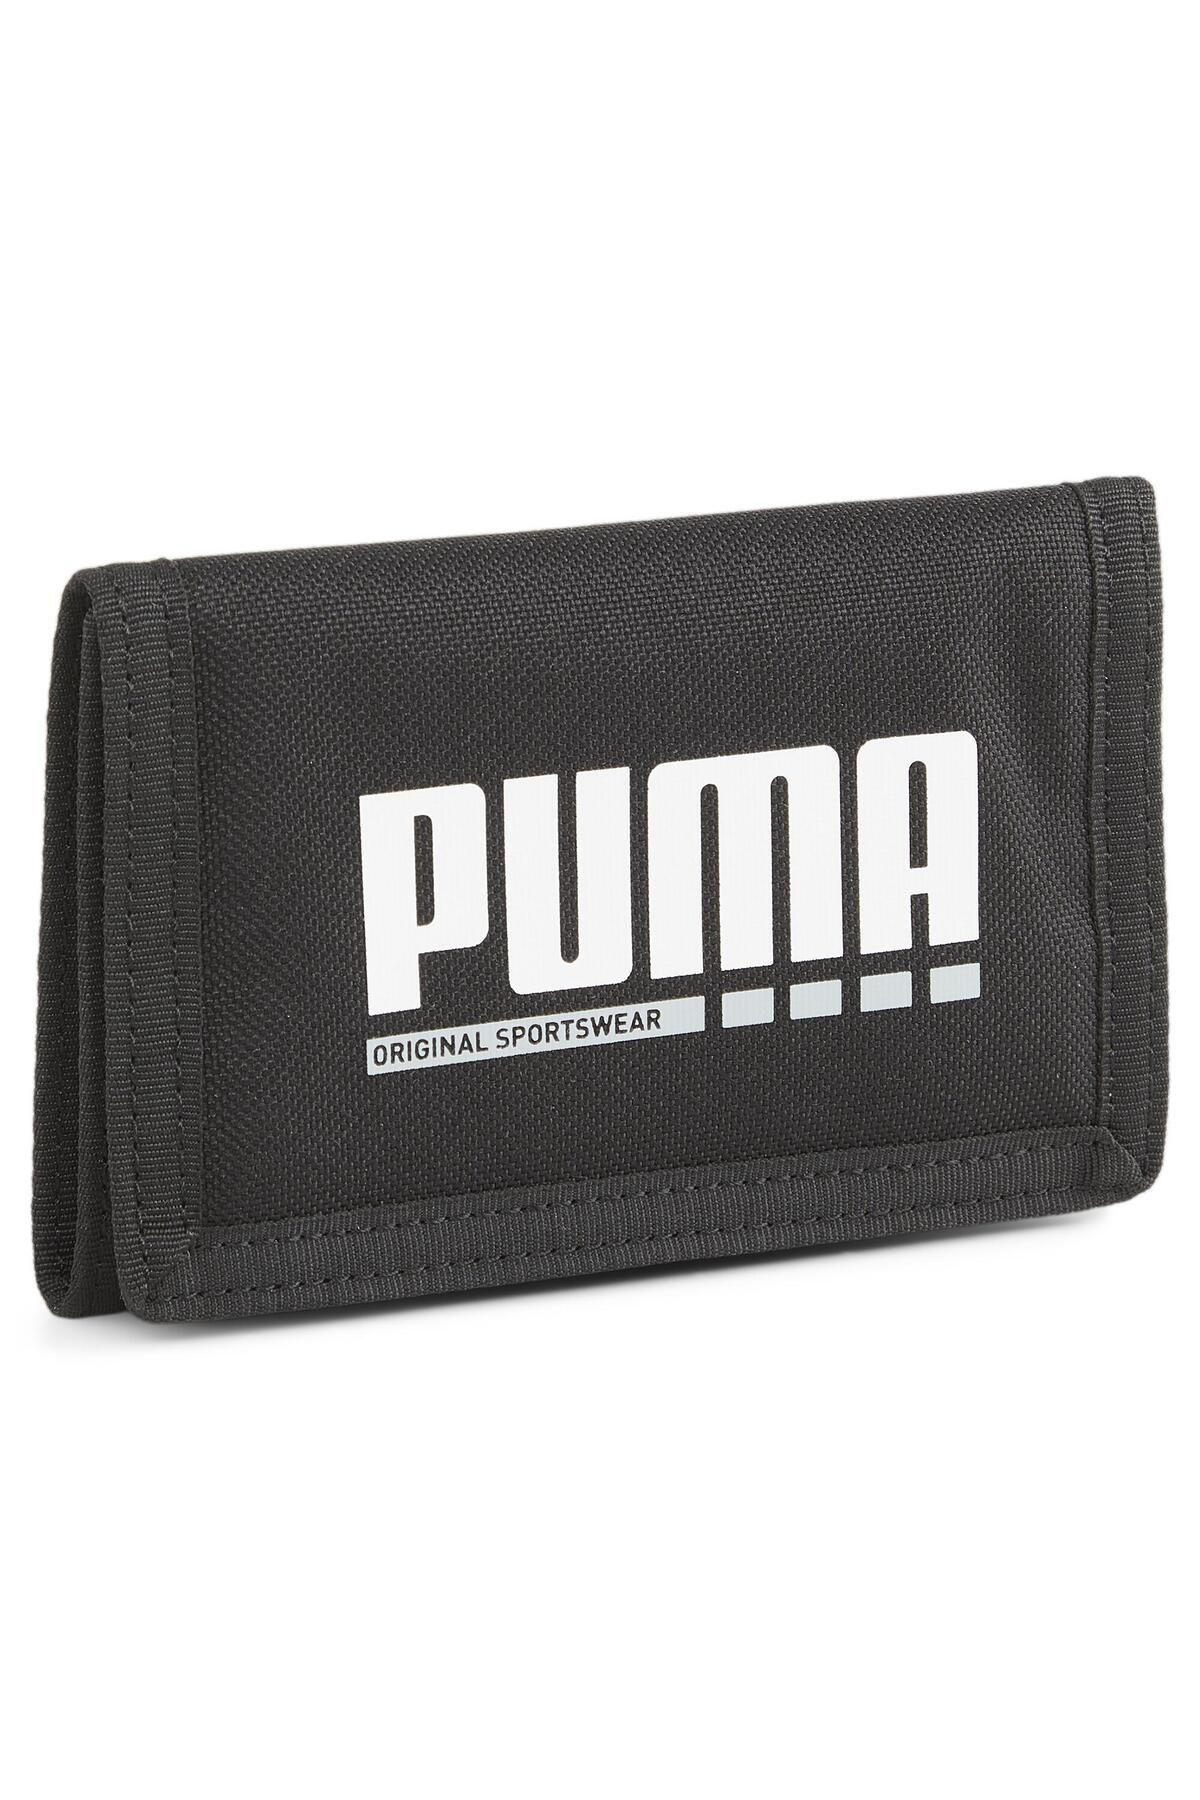 Puma Plus Wallet Unisex Cüzdan